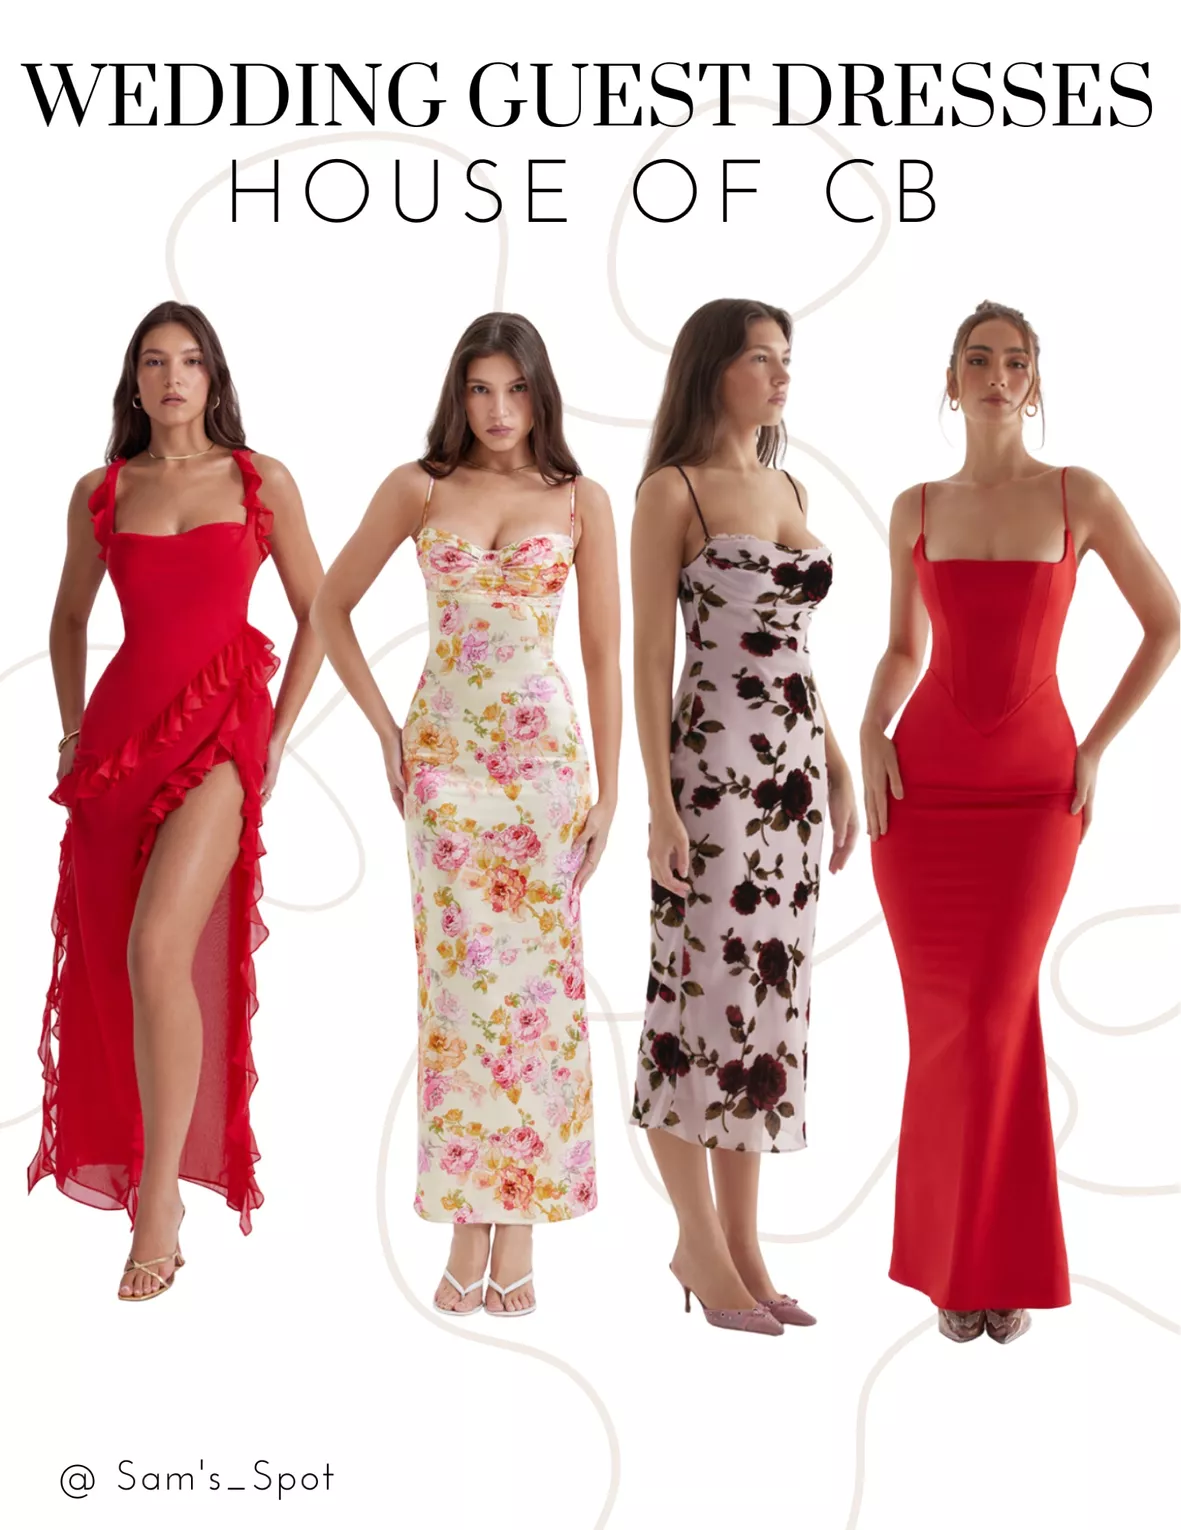 HOUSE OF CB Charmaine Corset Dress